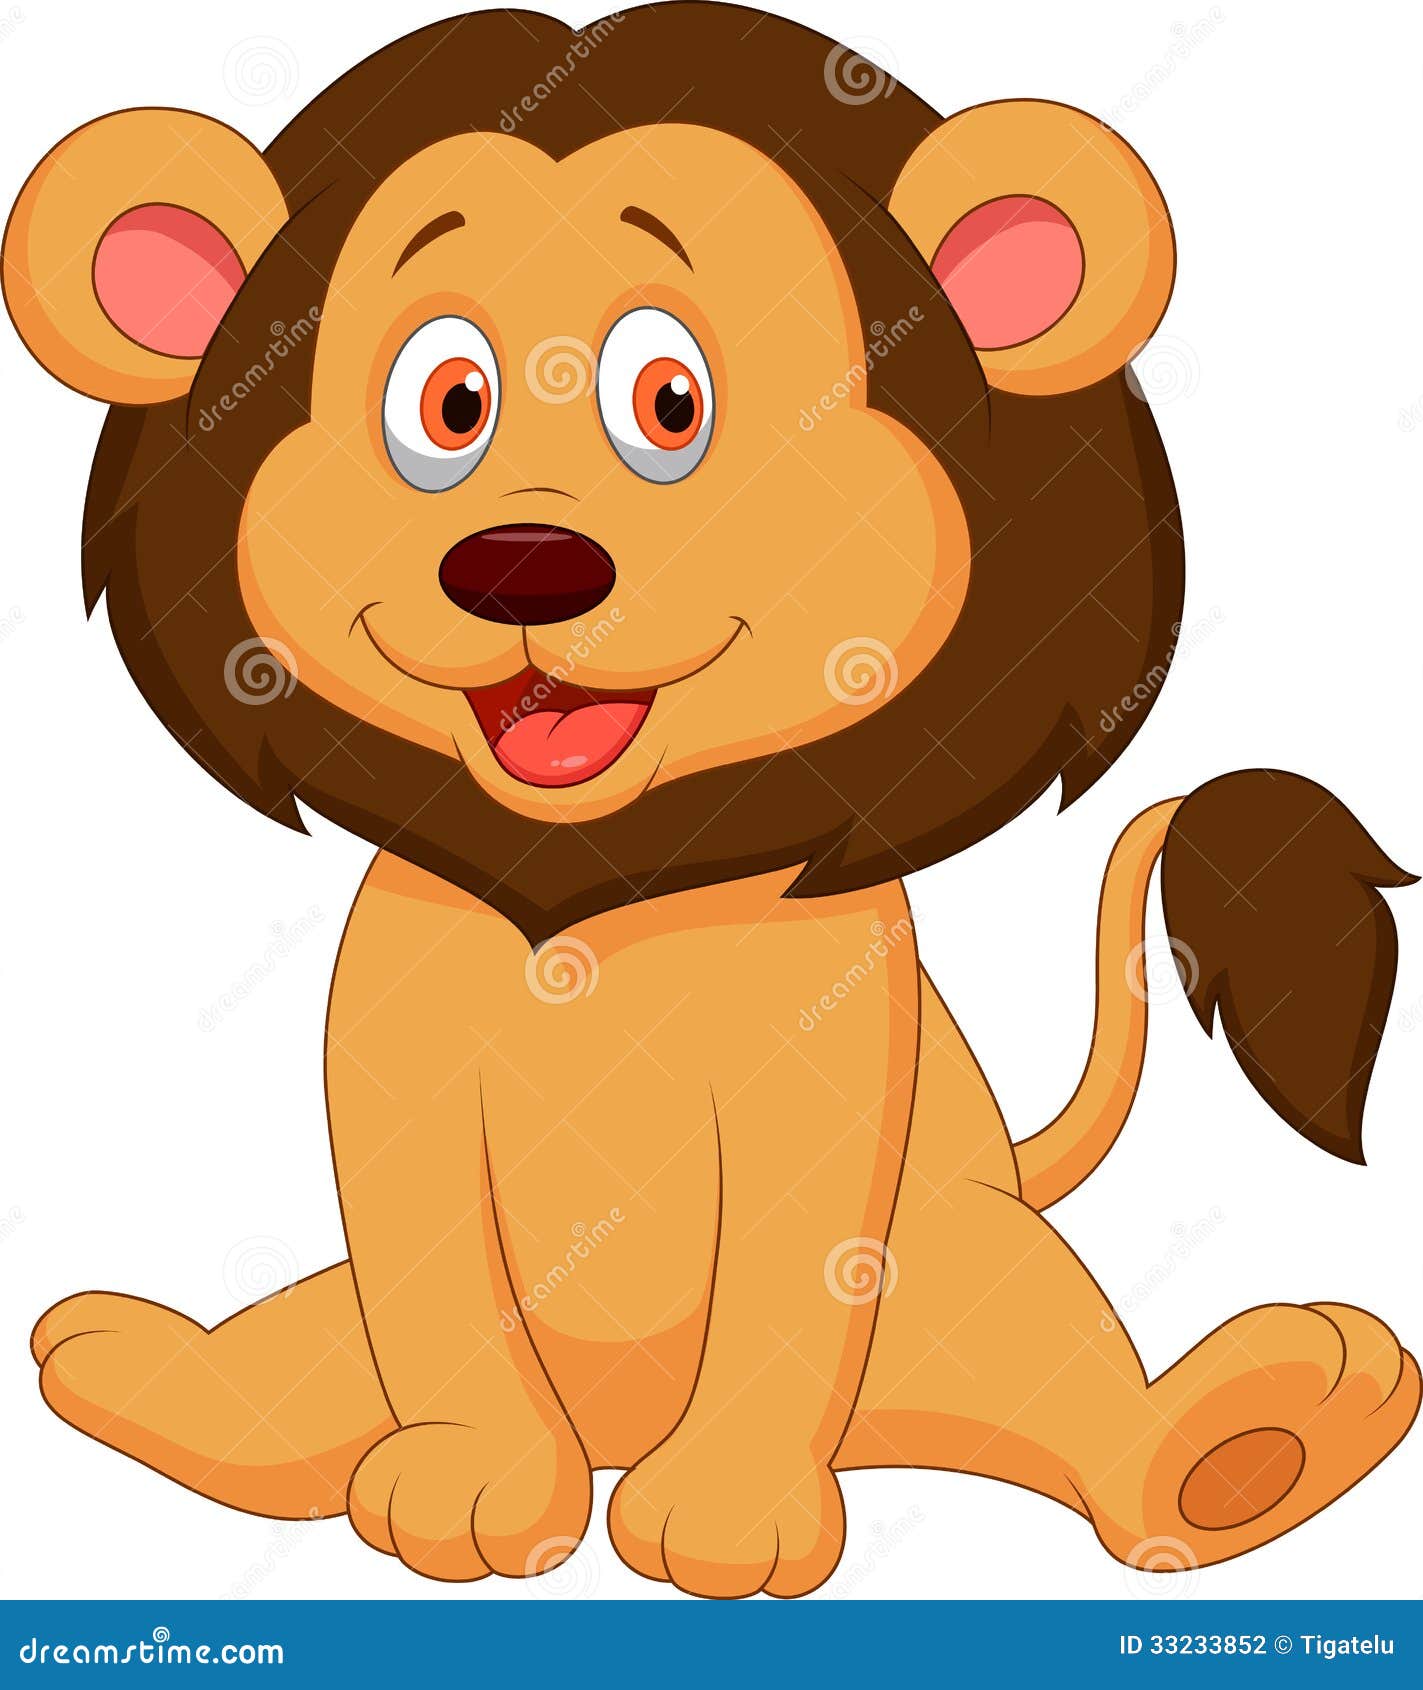 Cute baby lion cartoon stock vector. Illustration of design - 33233852